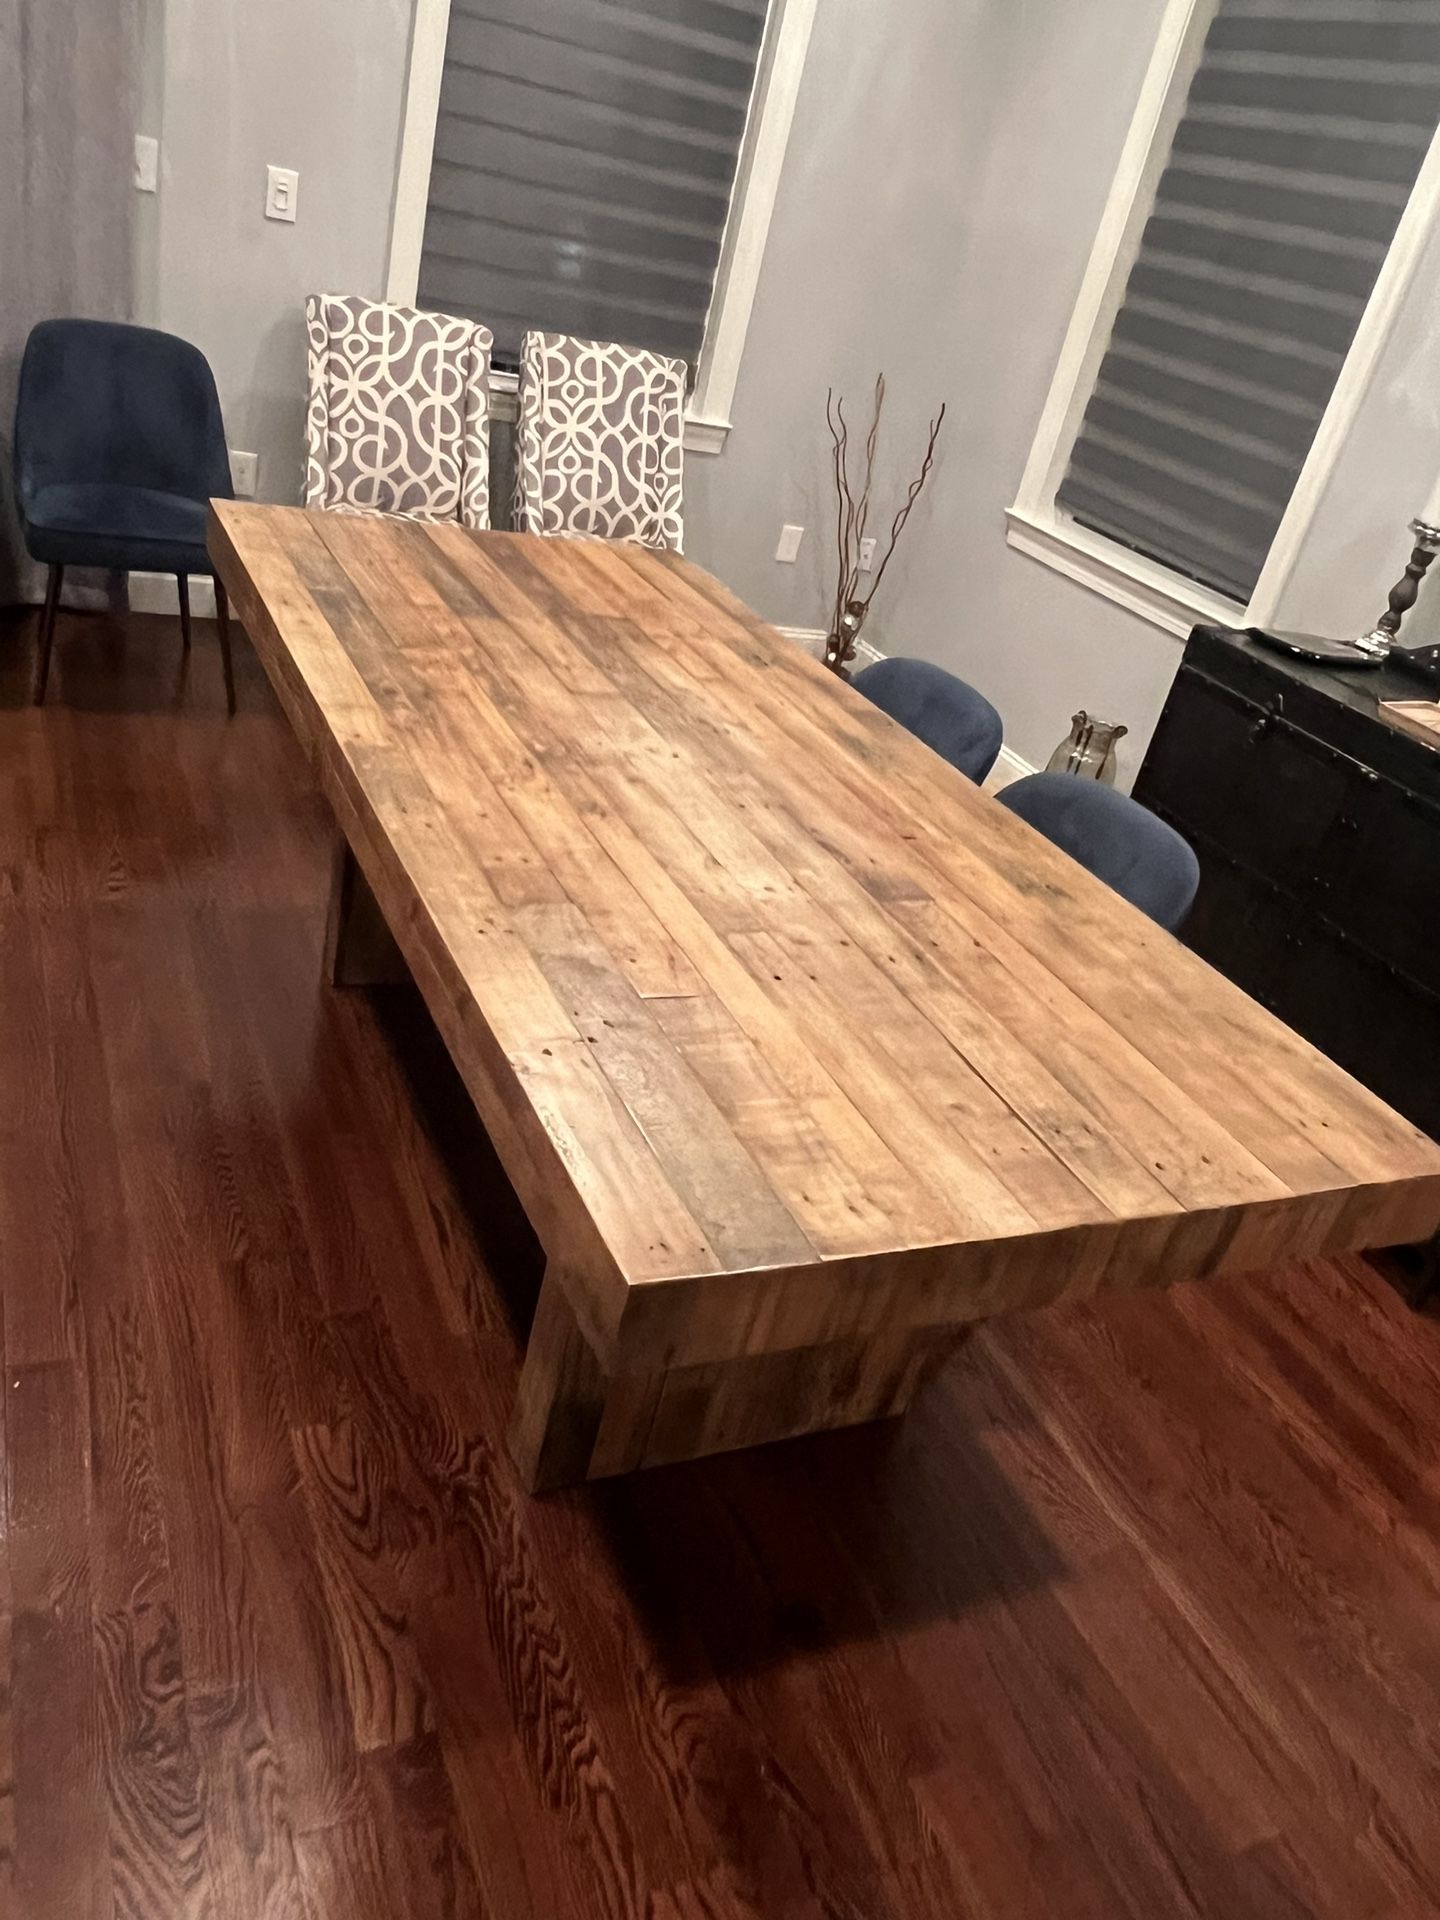 Wood Block Table